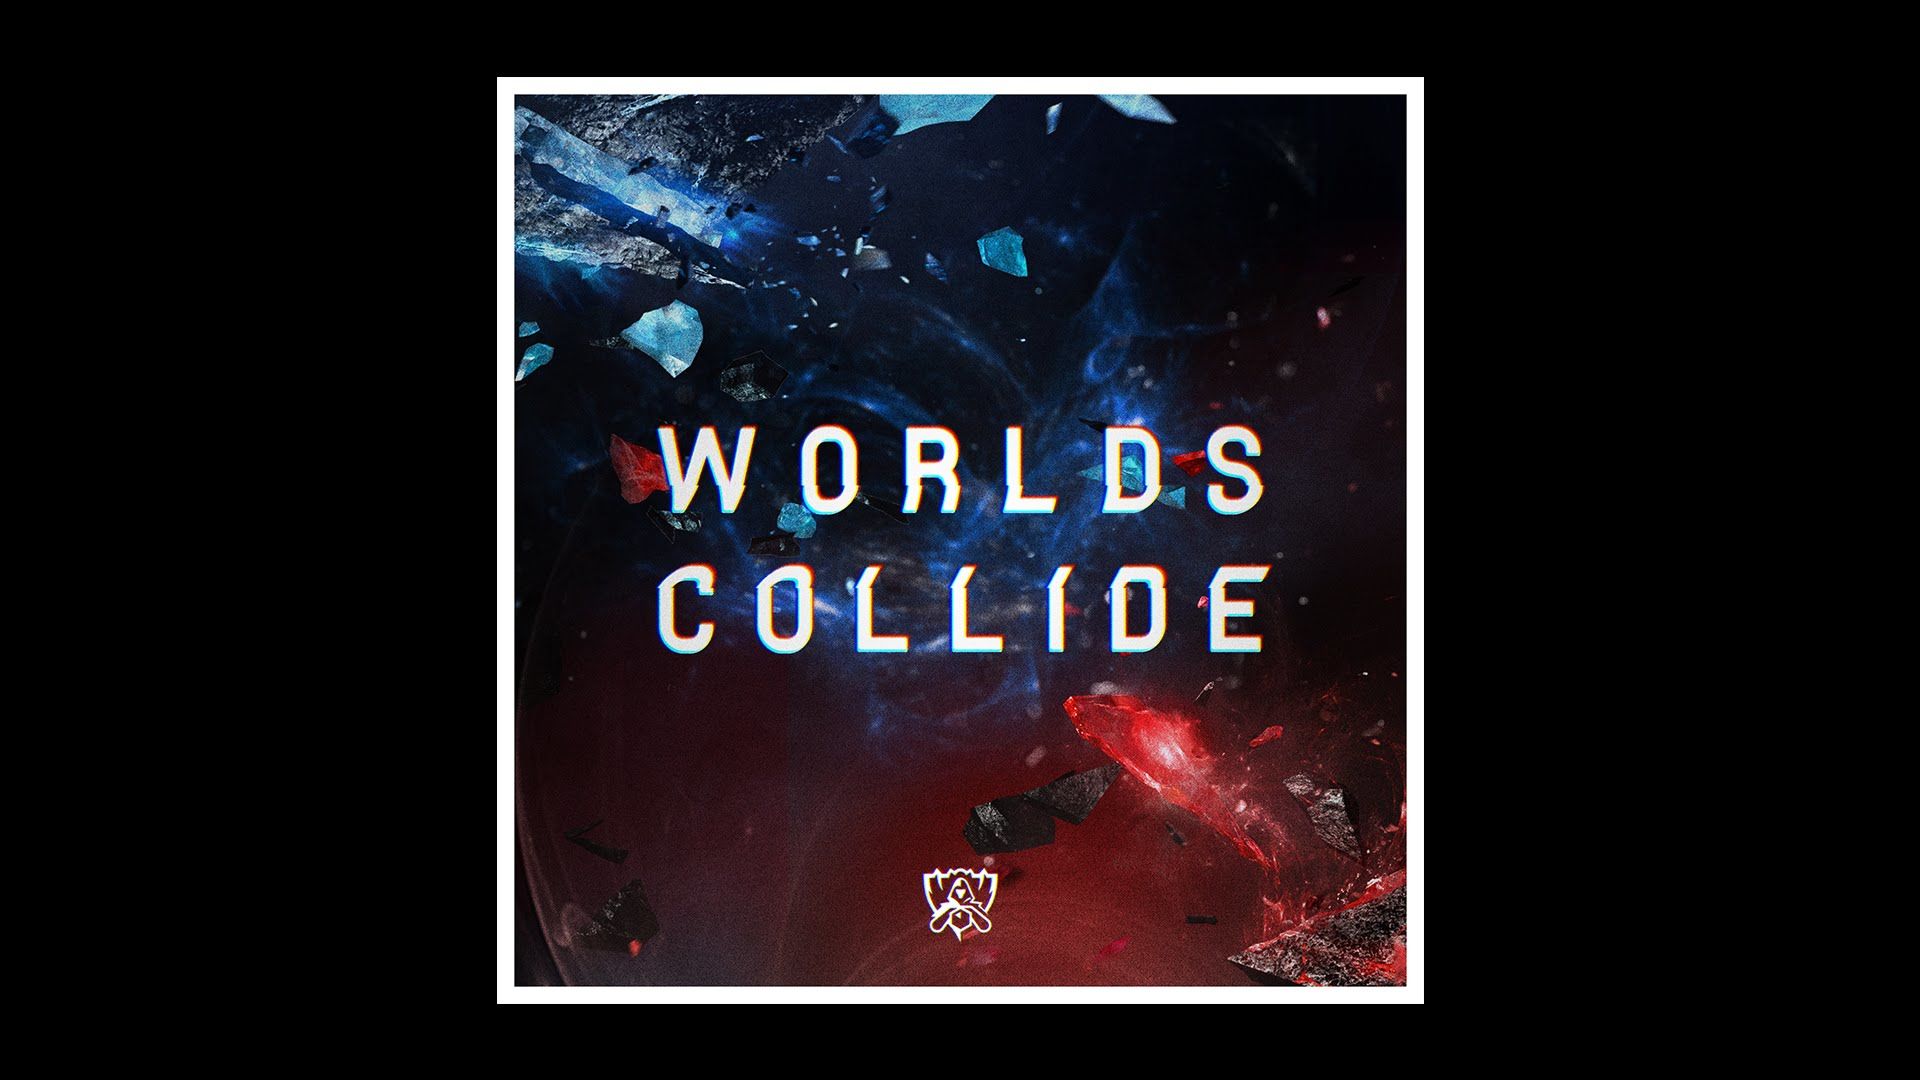 League of Legends - Worlds Collide (ft. Nicki Taylor) (장엄, 비장, 웅장, 게임, 리그 오브 레전드, 롤, LOL)